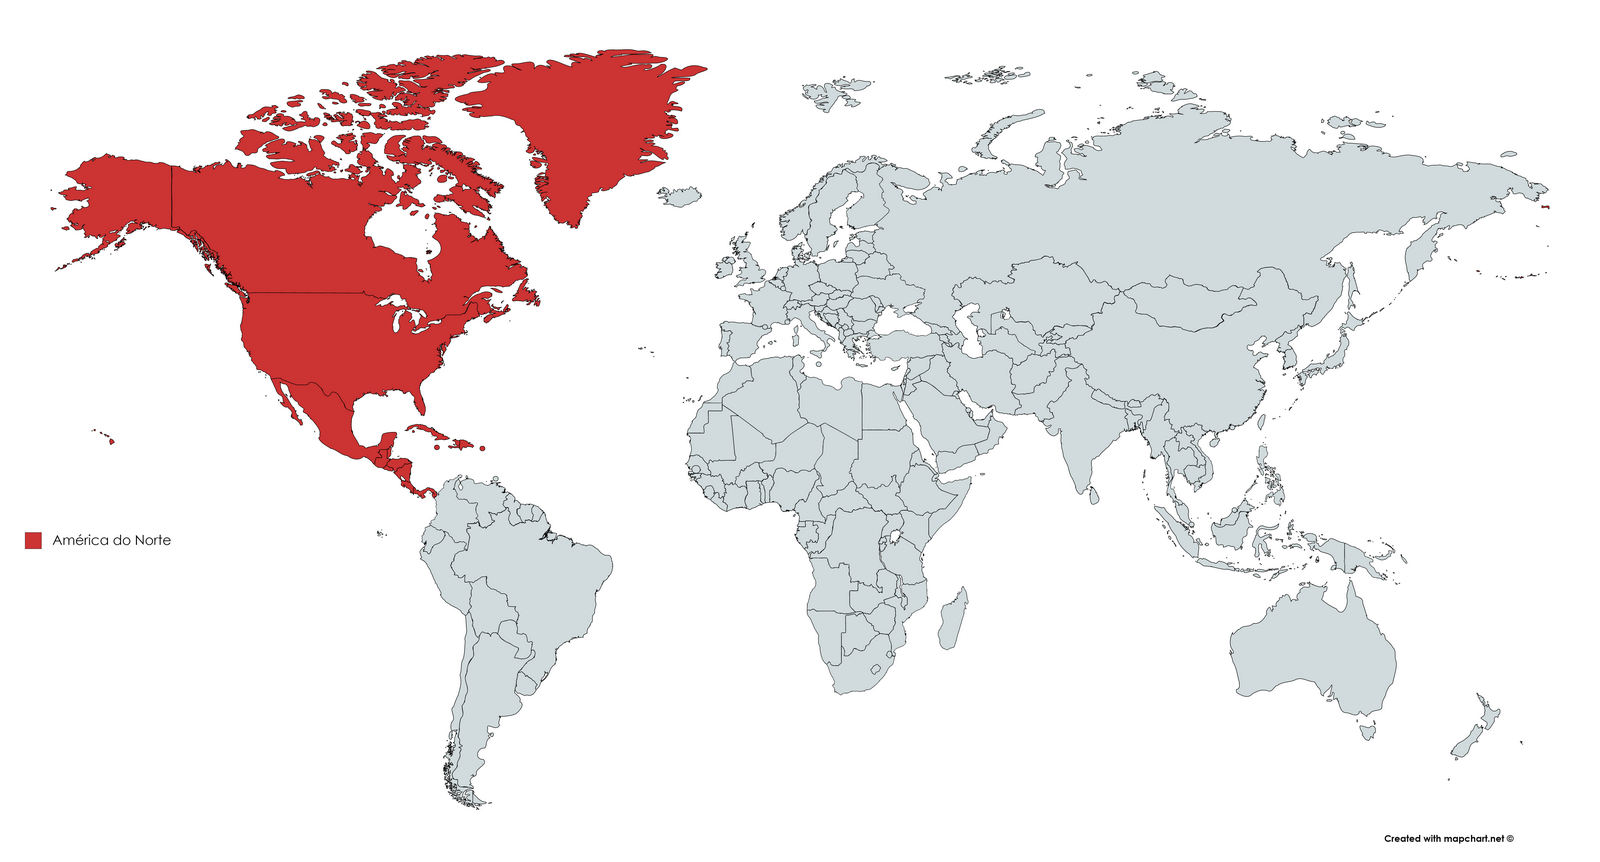 Mapa-Múndi: Mapa do Mundo e os Mapas dos Continentes